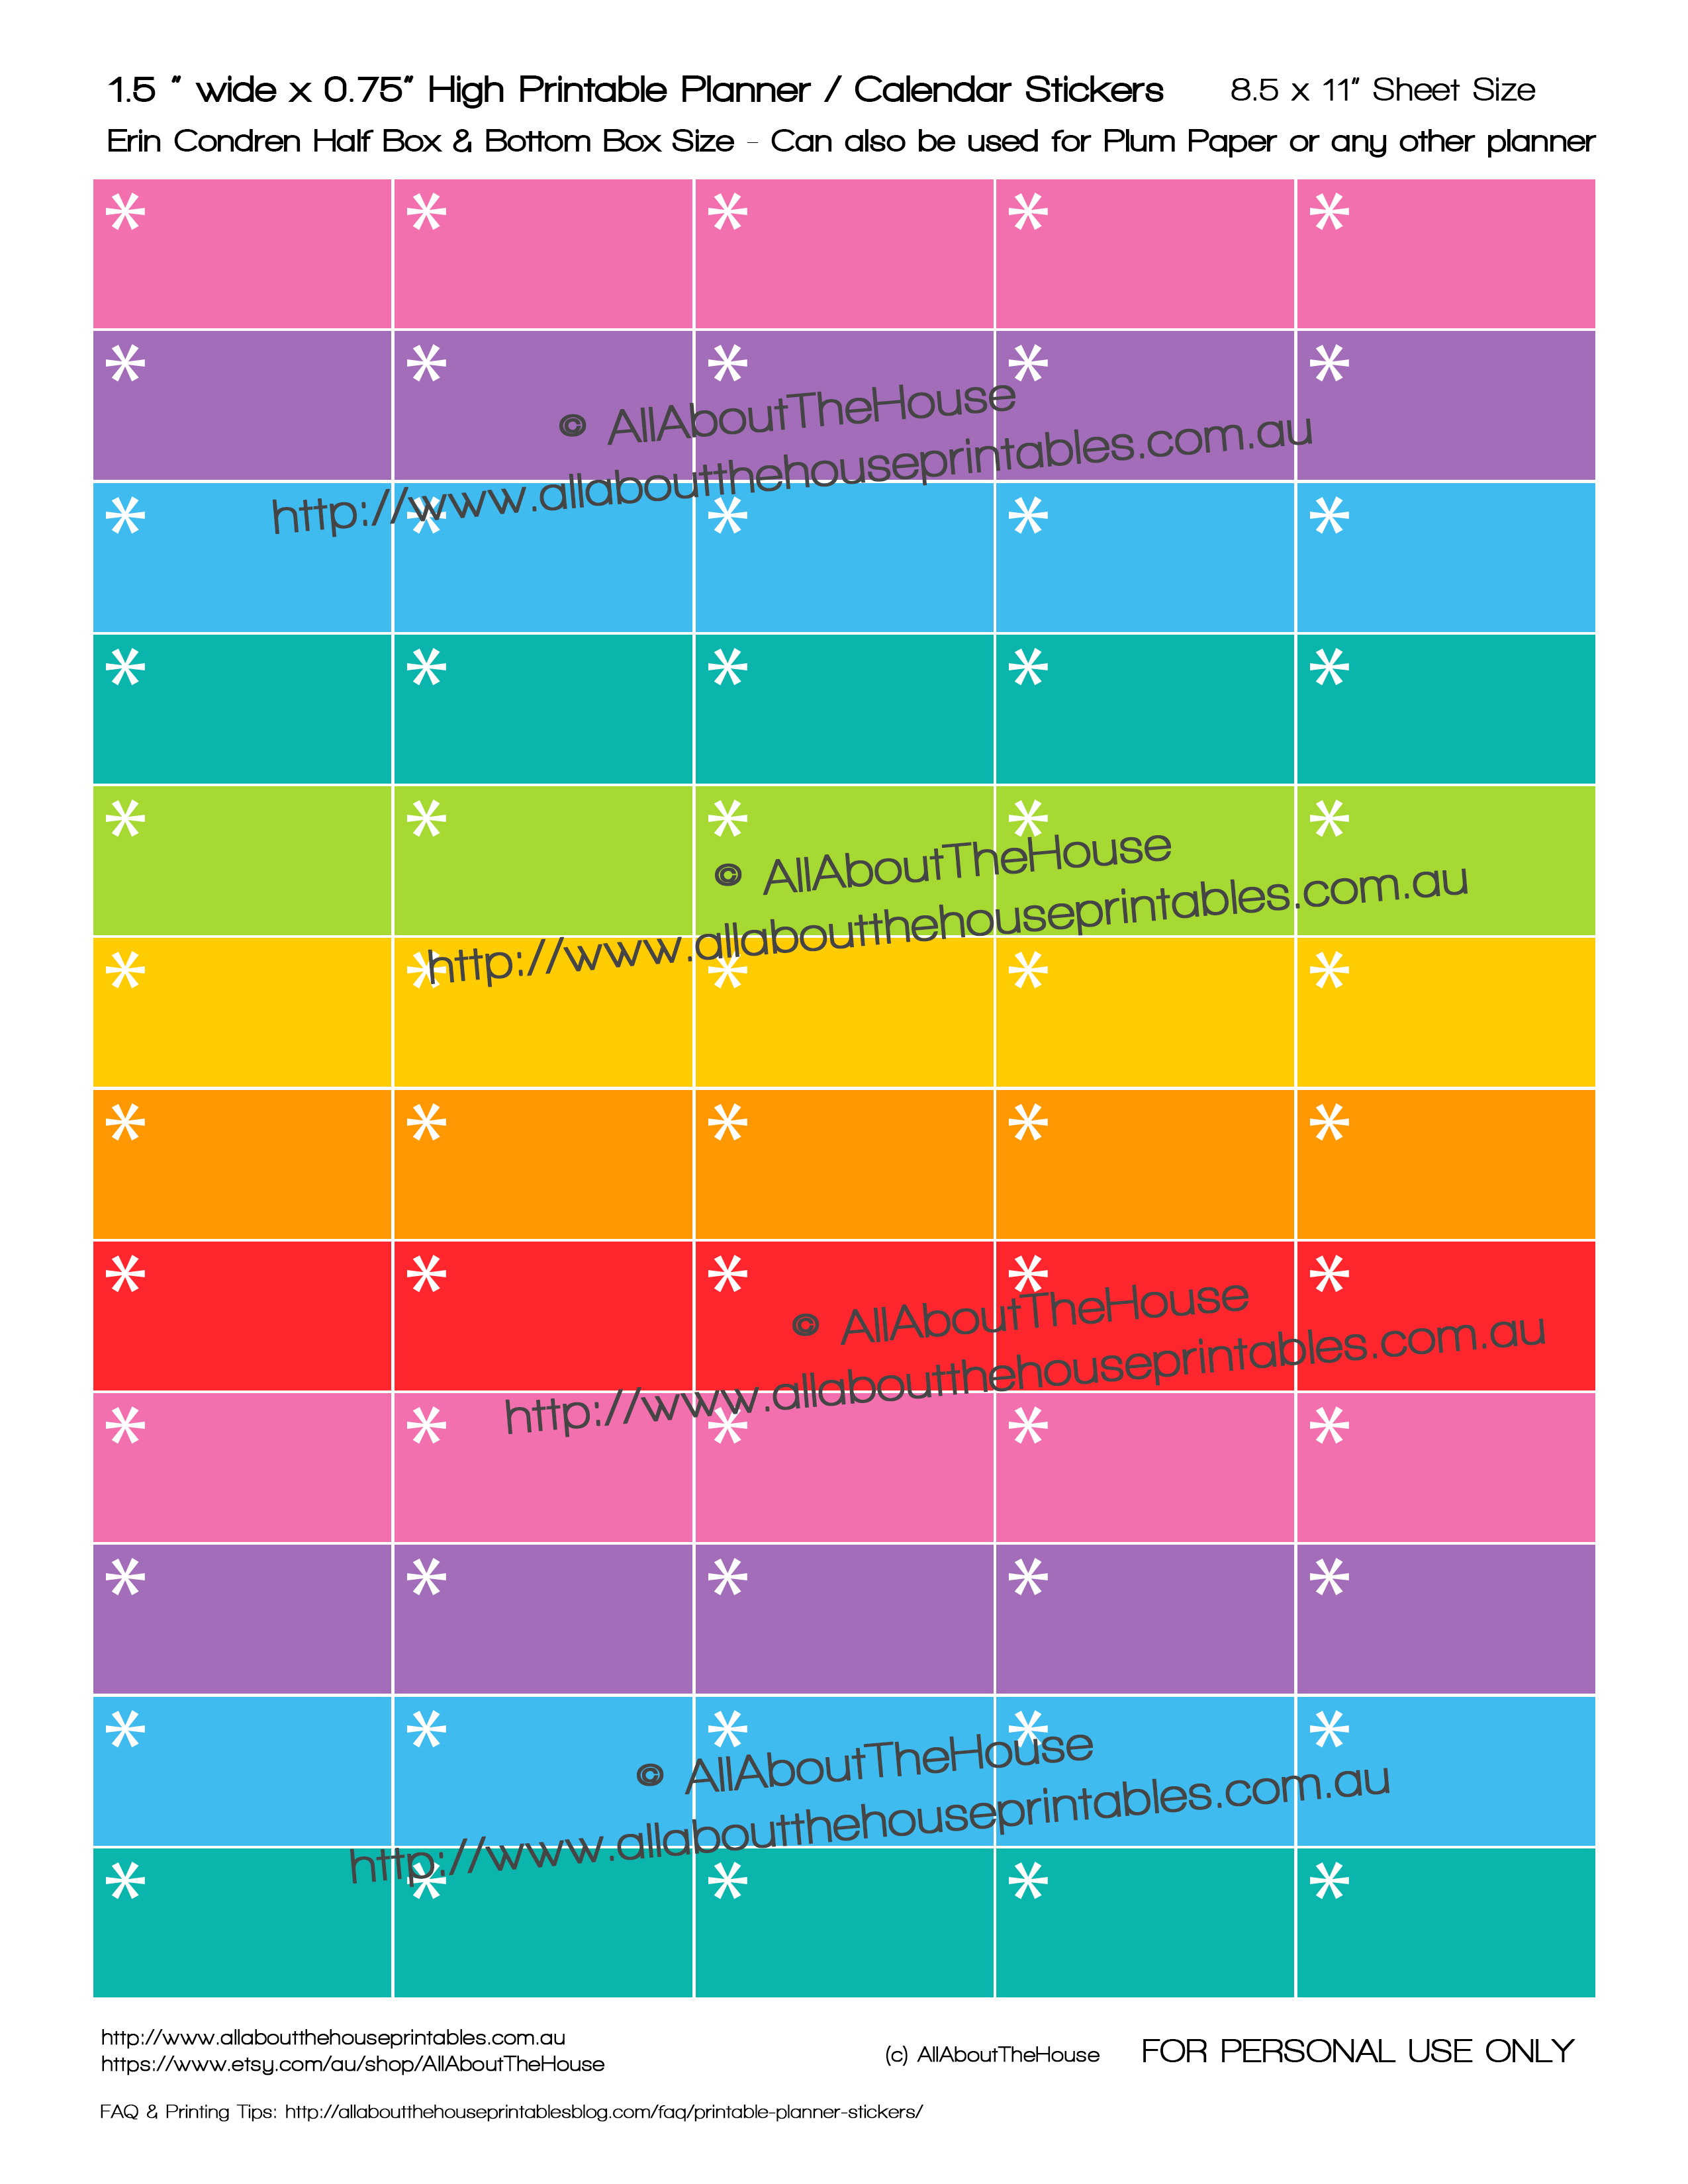 FREE Asterisk Planner Stickers Printable – DIY Downloadable PDF